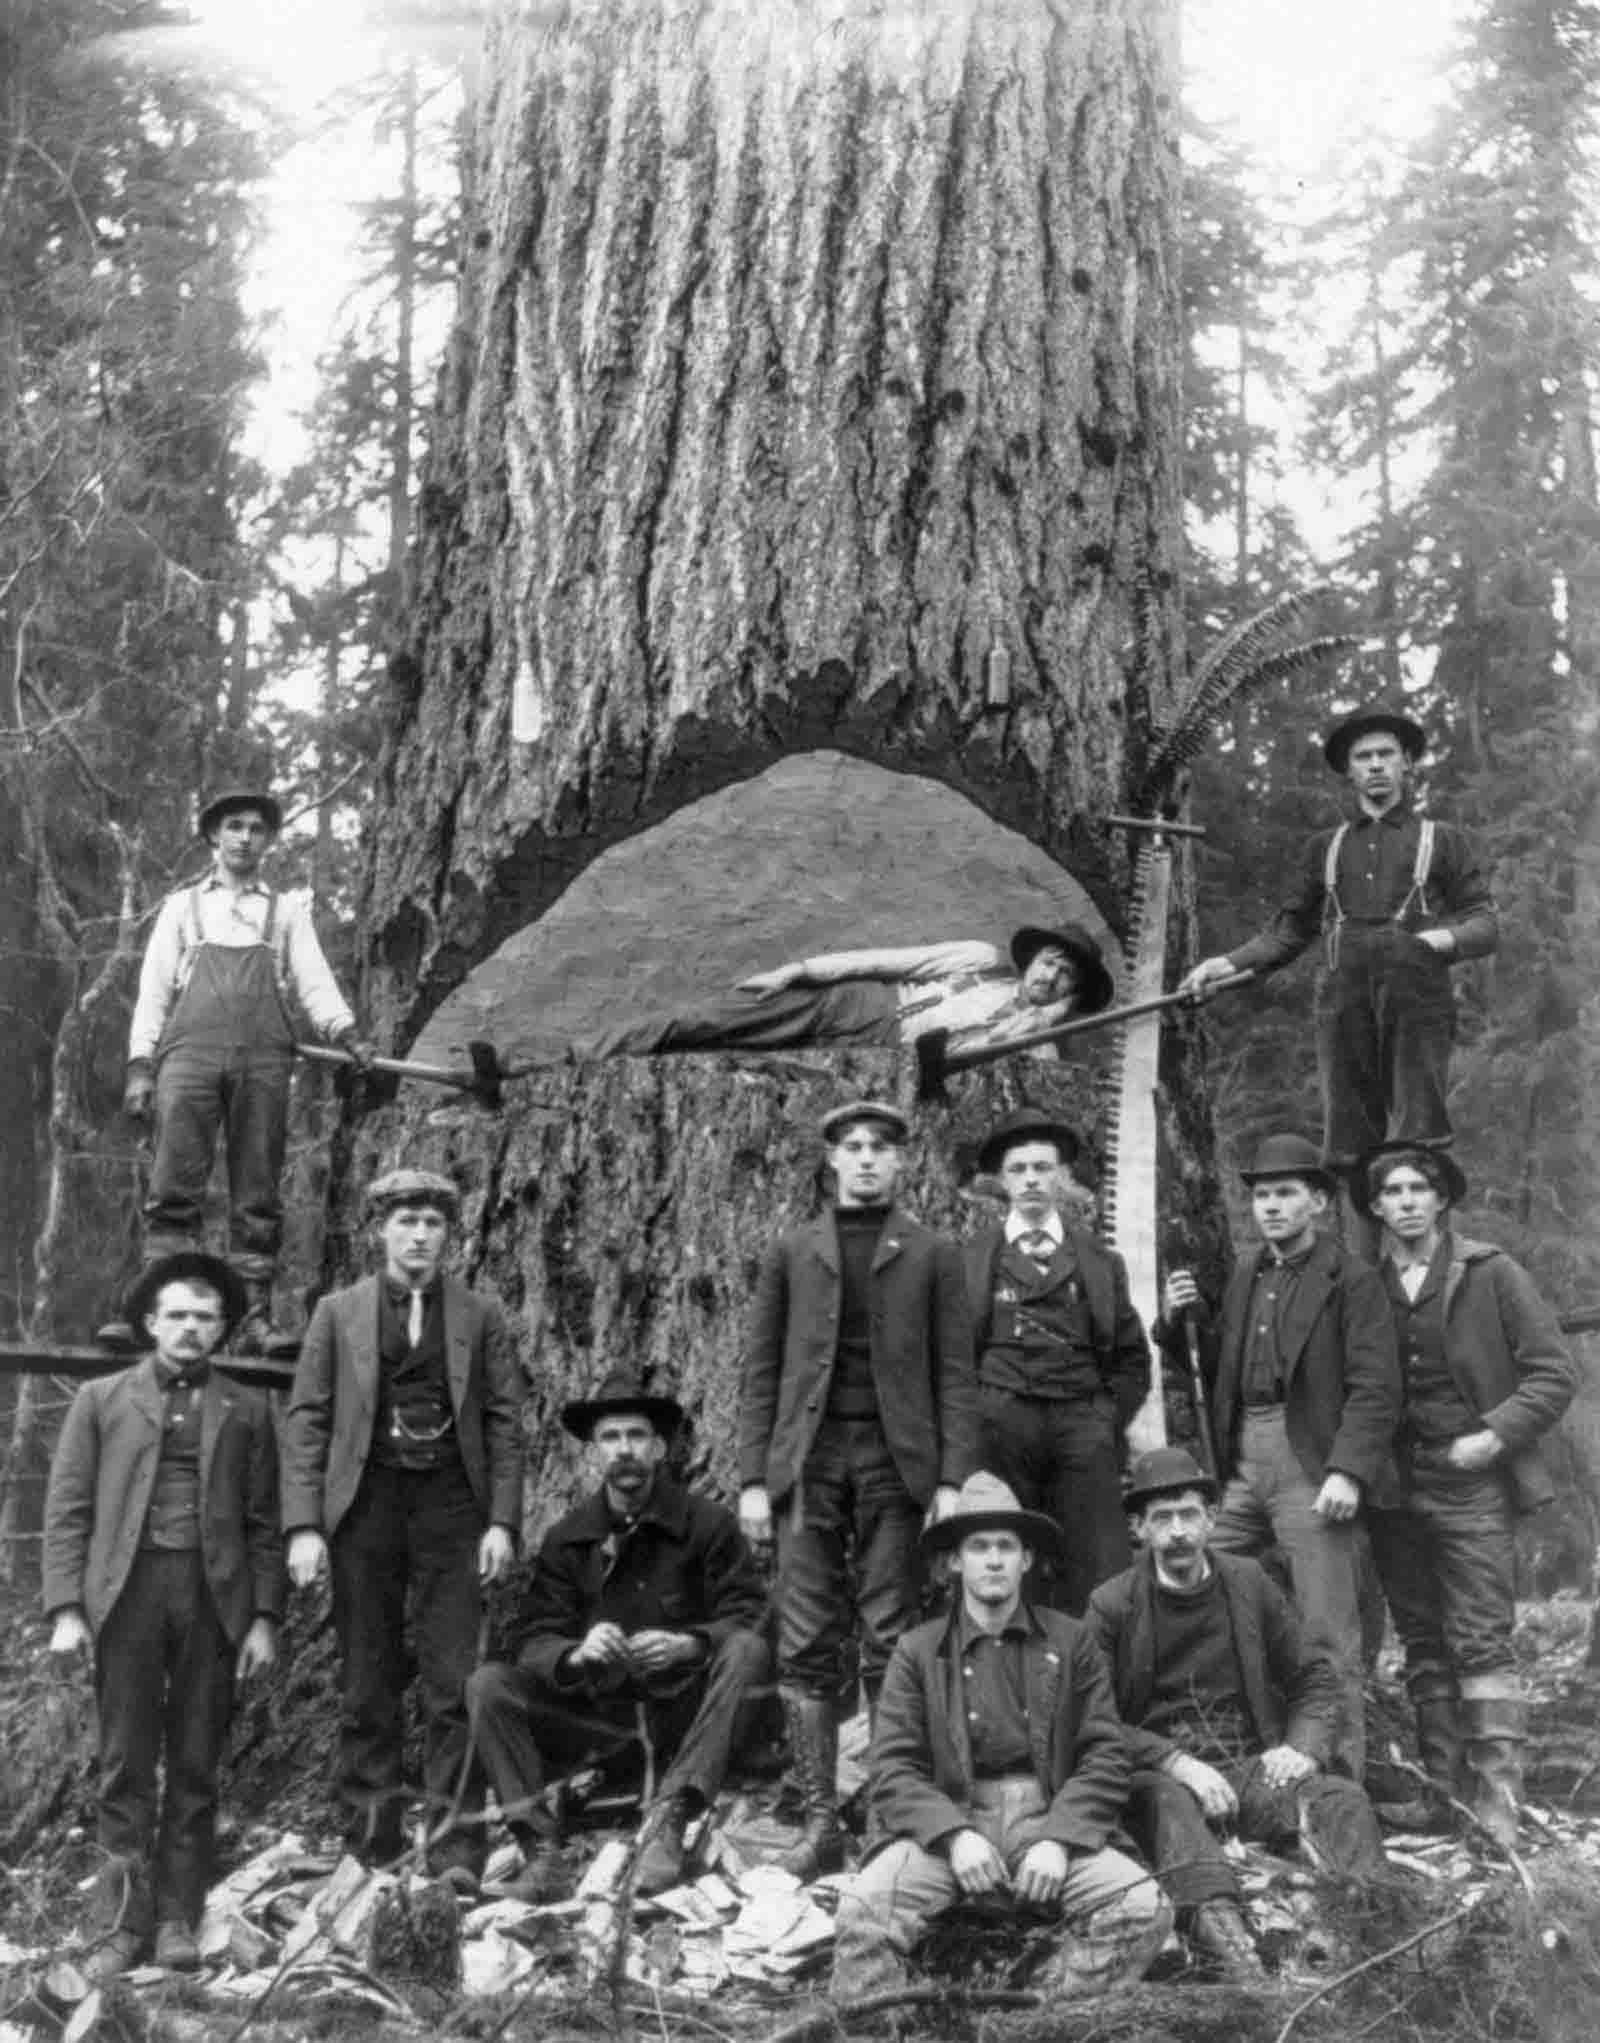 Lumberjacks pose with a fir tree in Washington, 1902.